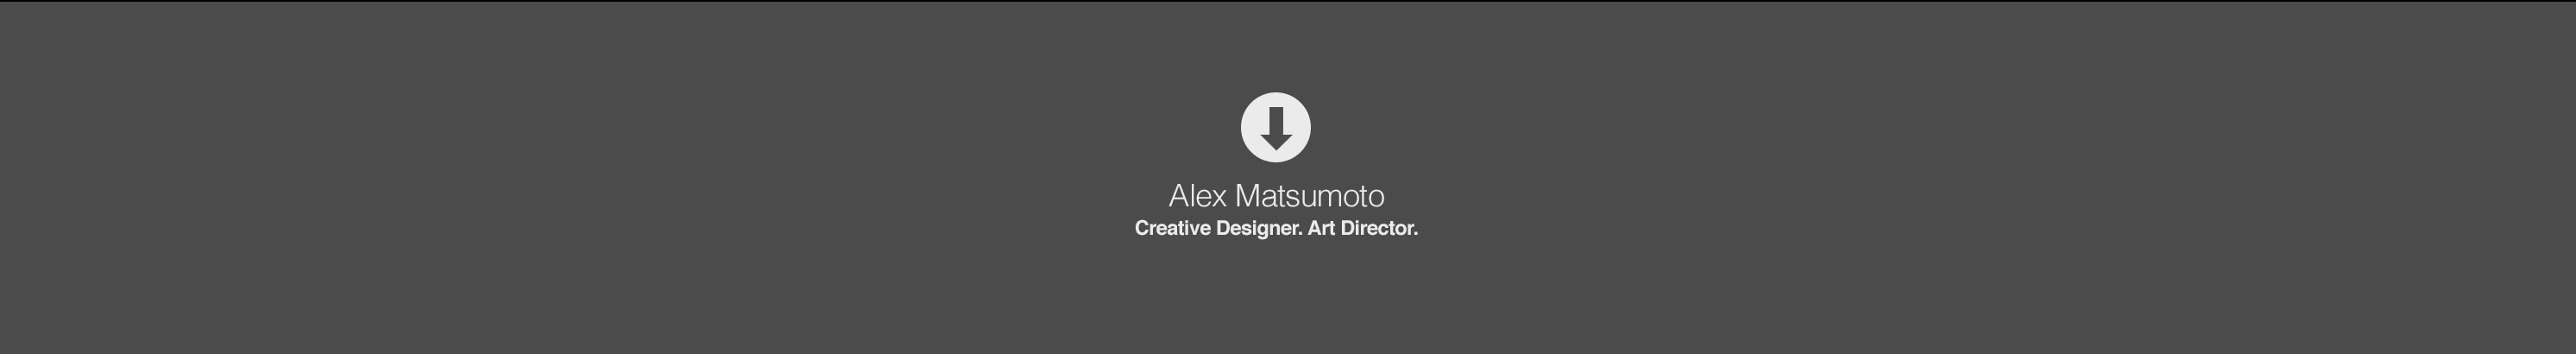 Alex Matsumoto 的個人檔案橫幅